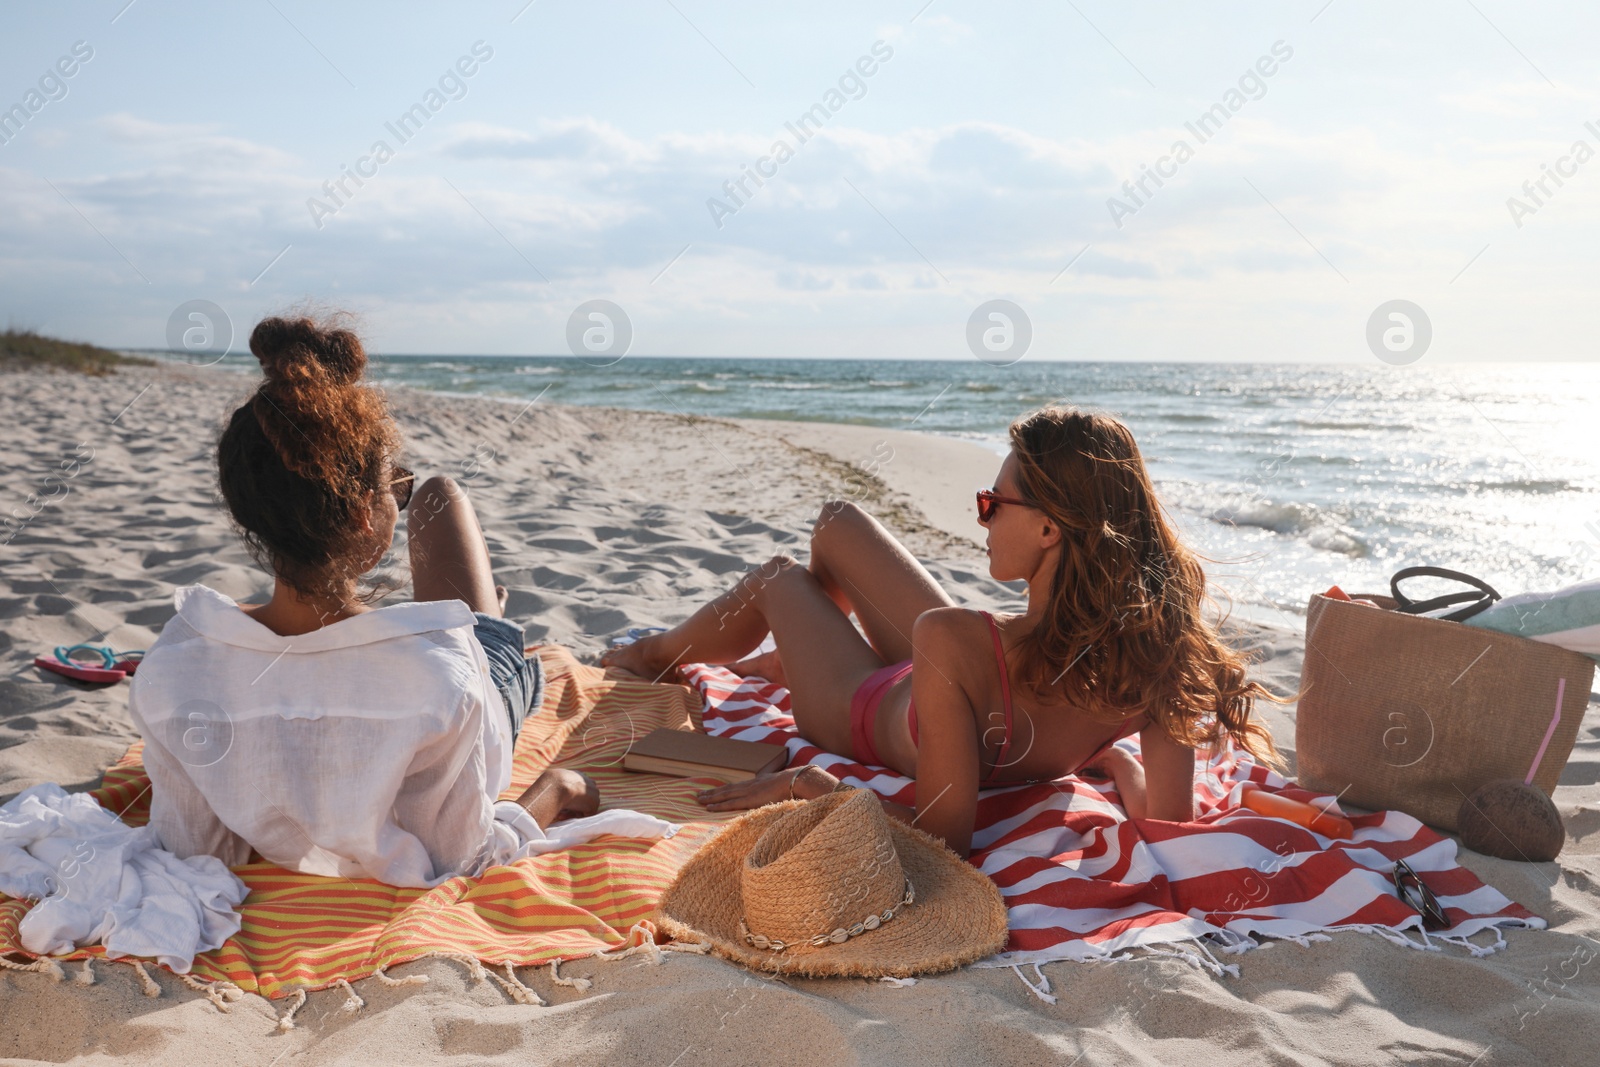 Photo of Friends lying on beach towels near sea